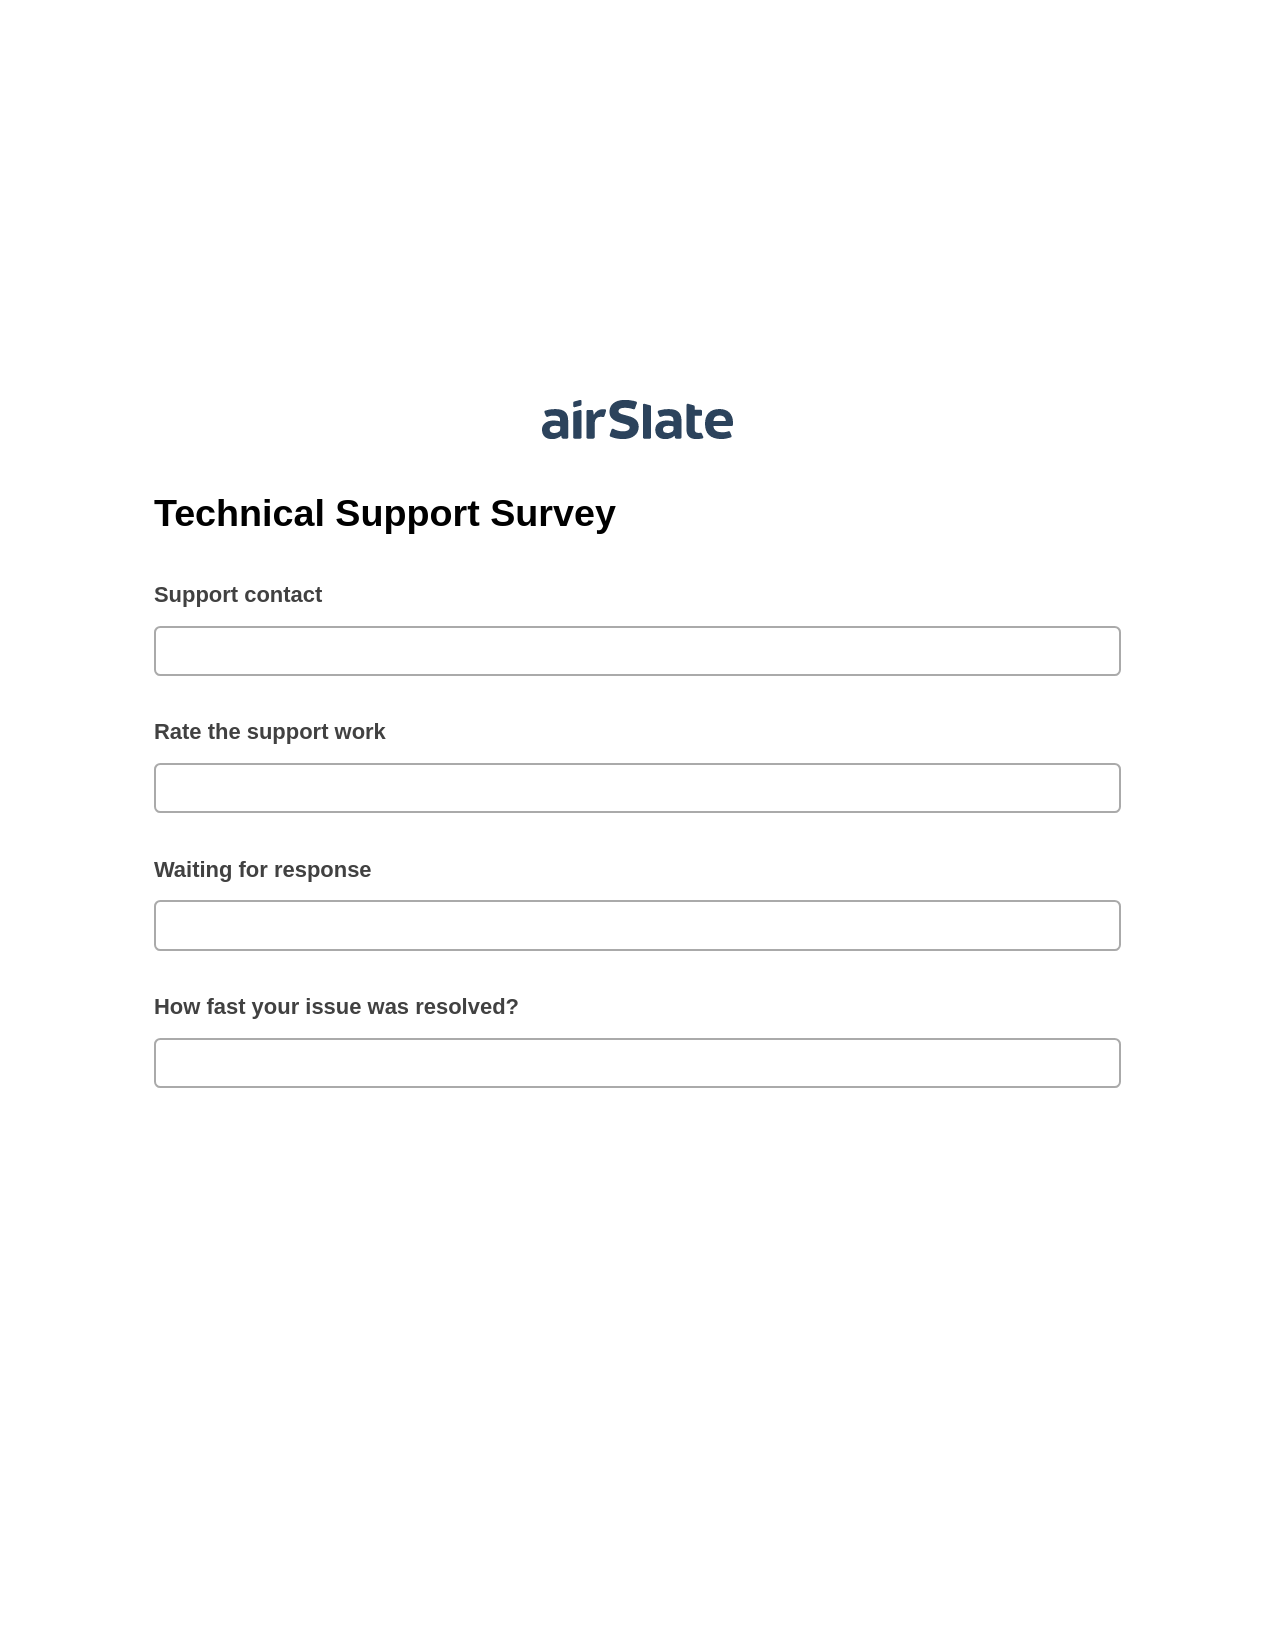 Multirole Technical Support Survey Pre-fill from CSV File Bot, Create QuickBooks Invoice Bot, Slack Notification Postfinish Bot